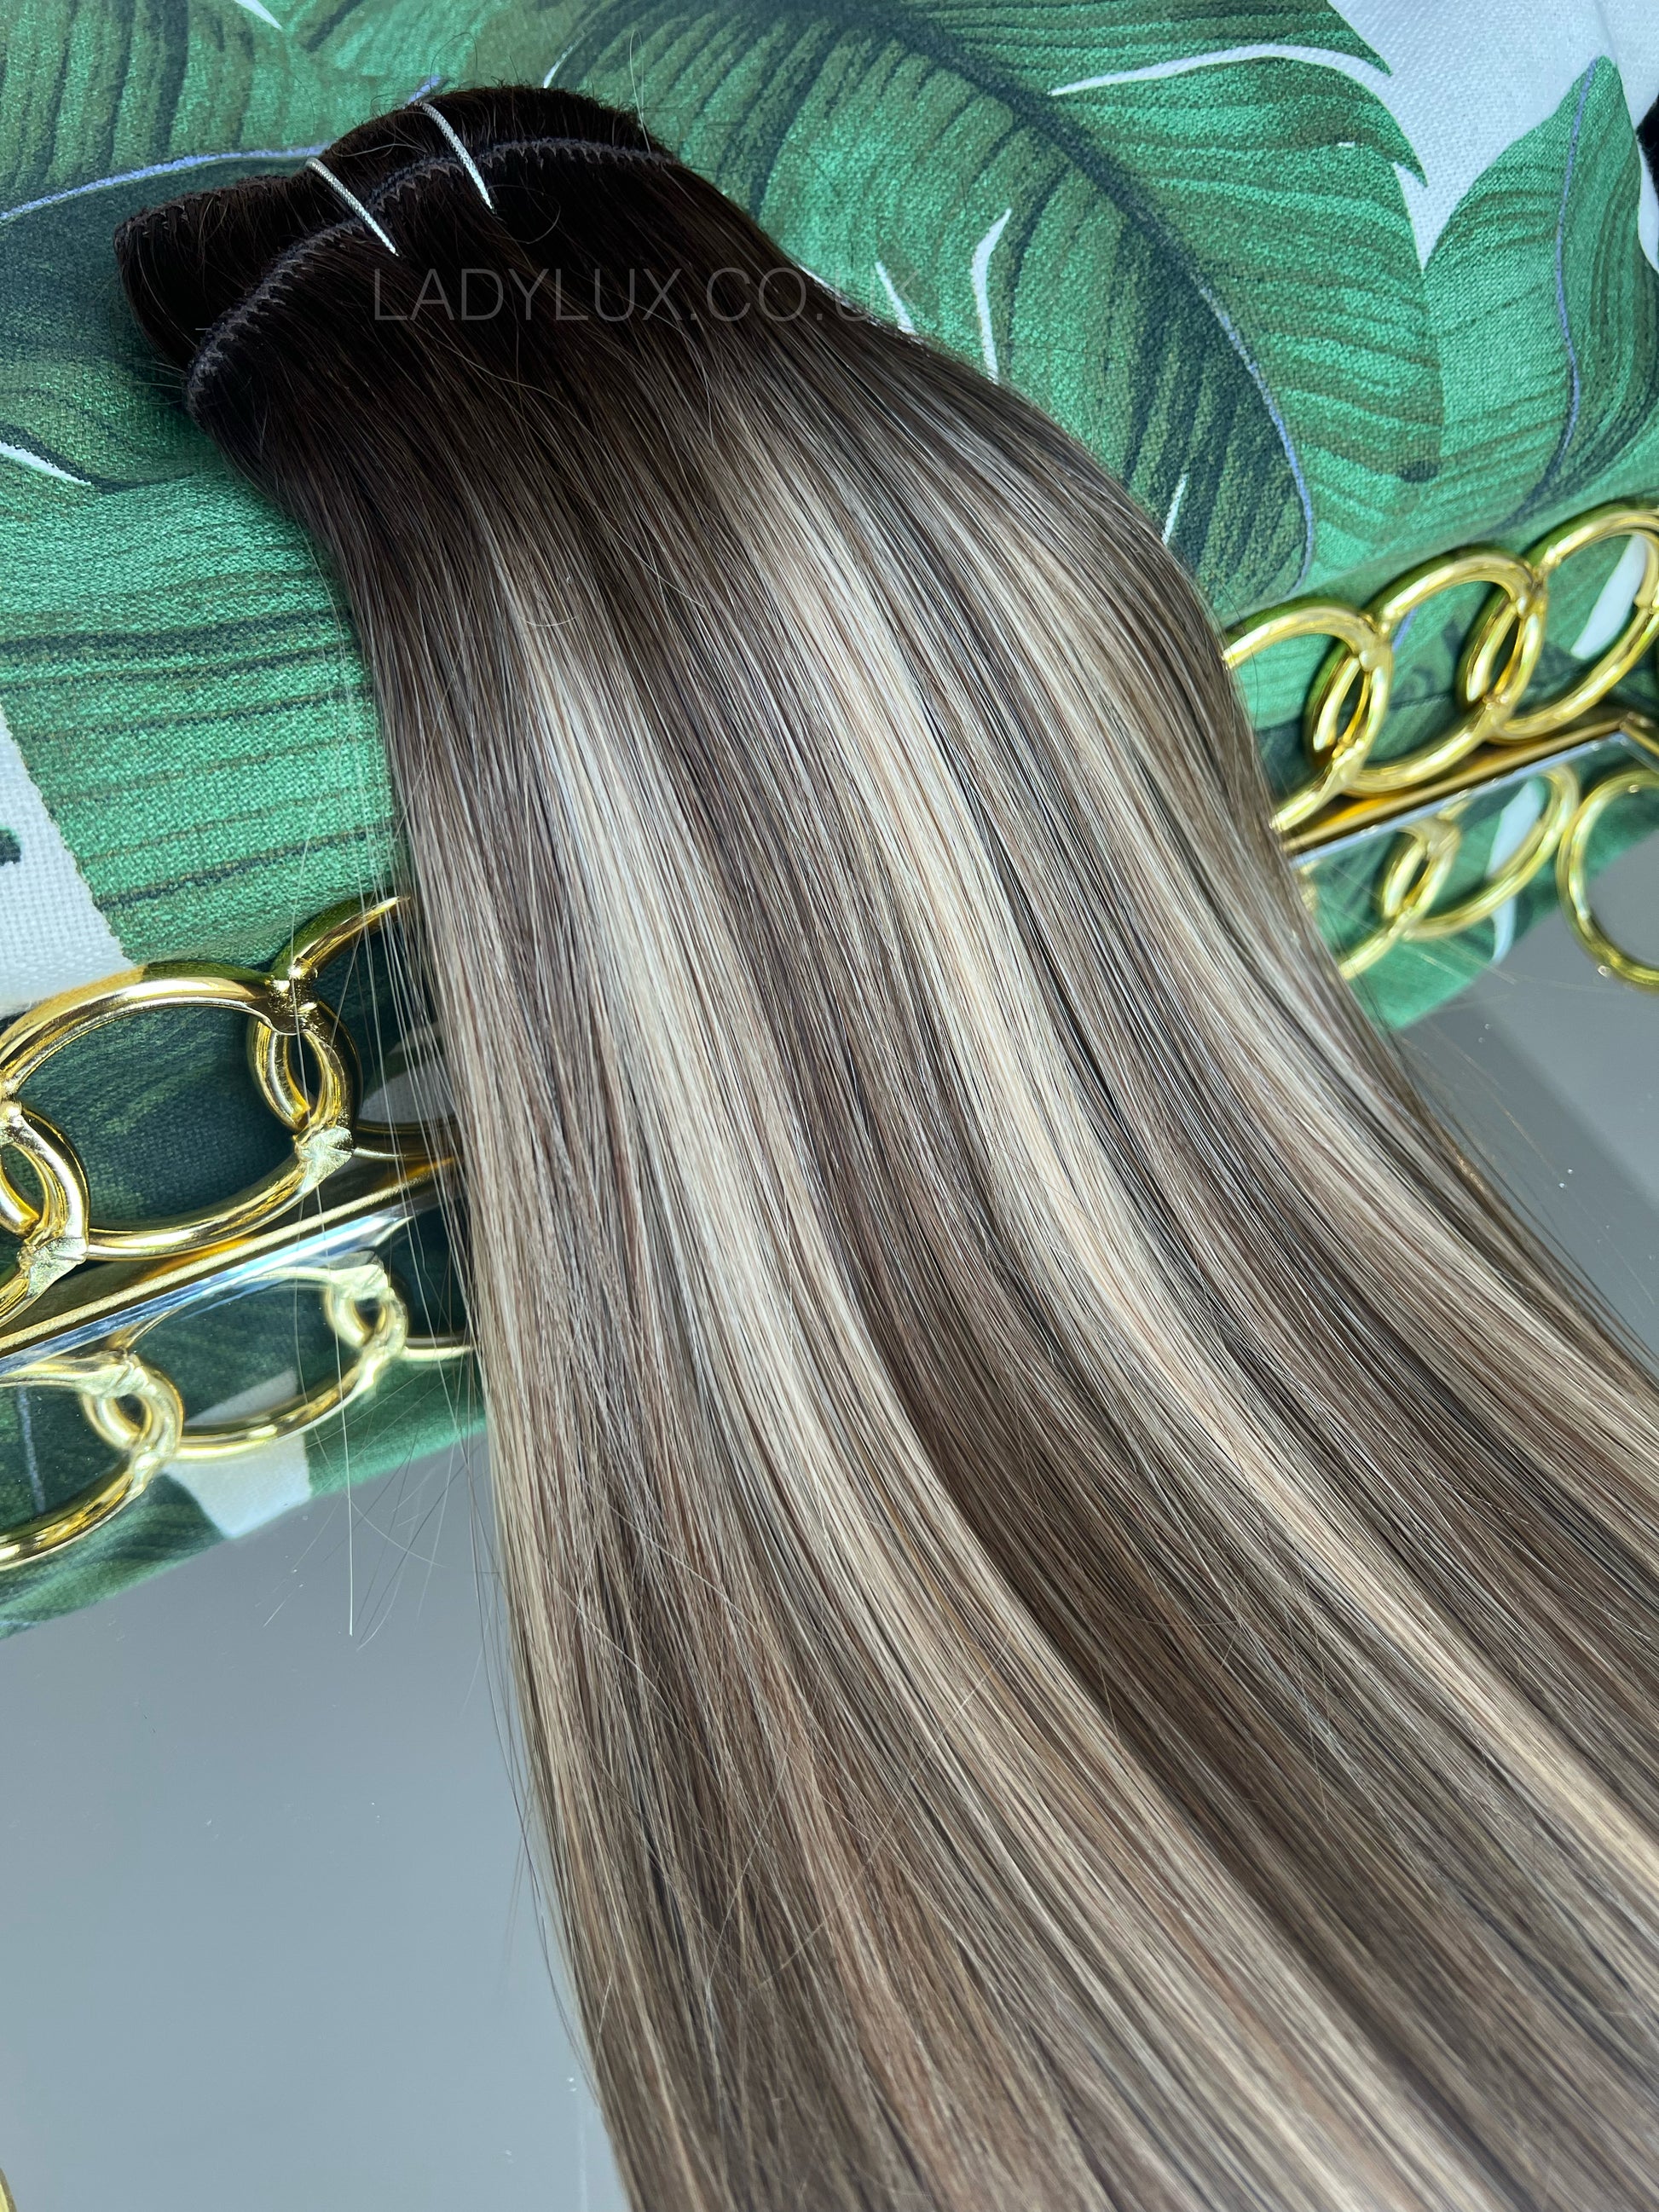 20” Deluxe 200g Human Hair - Toasted Caramel Balayage - Ladylux